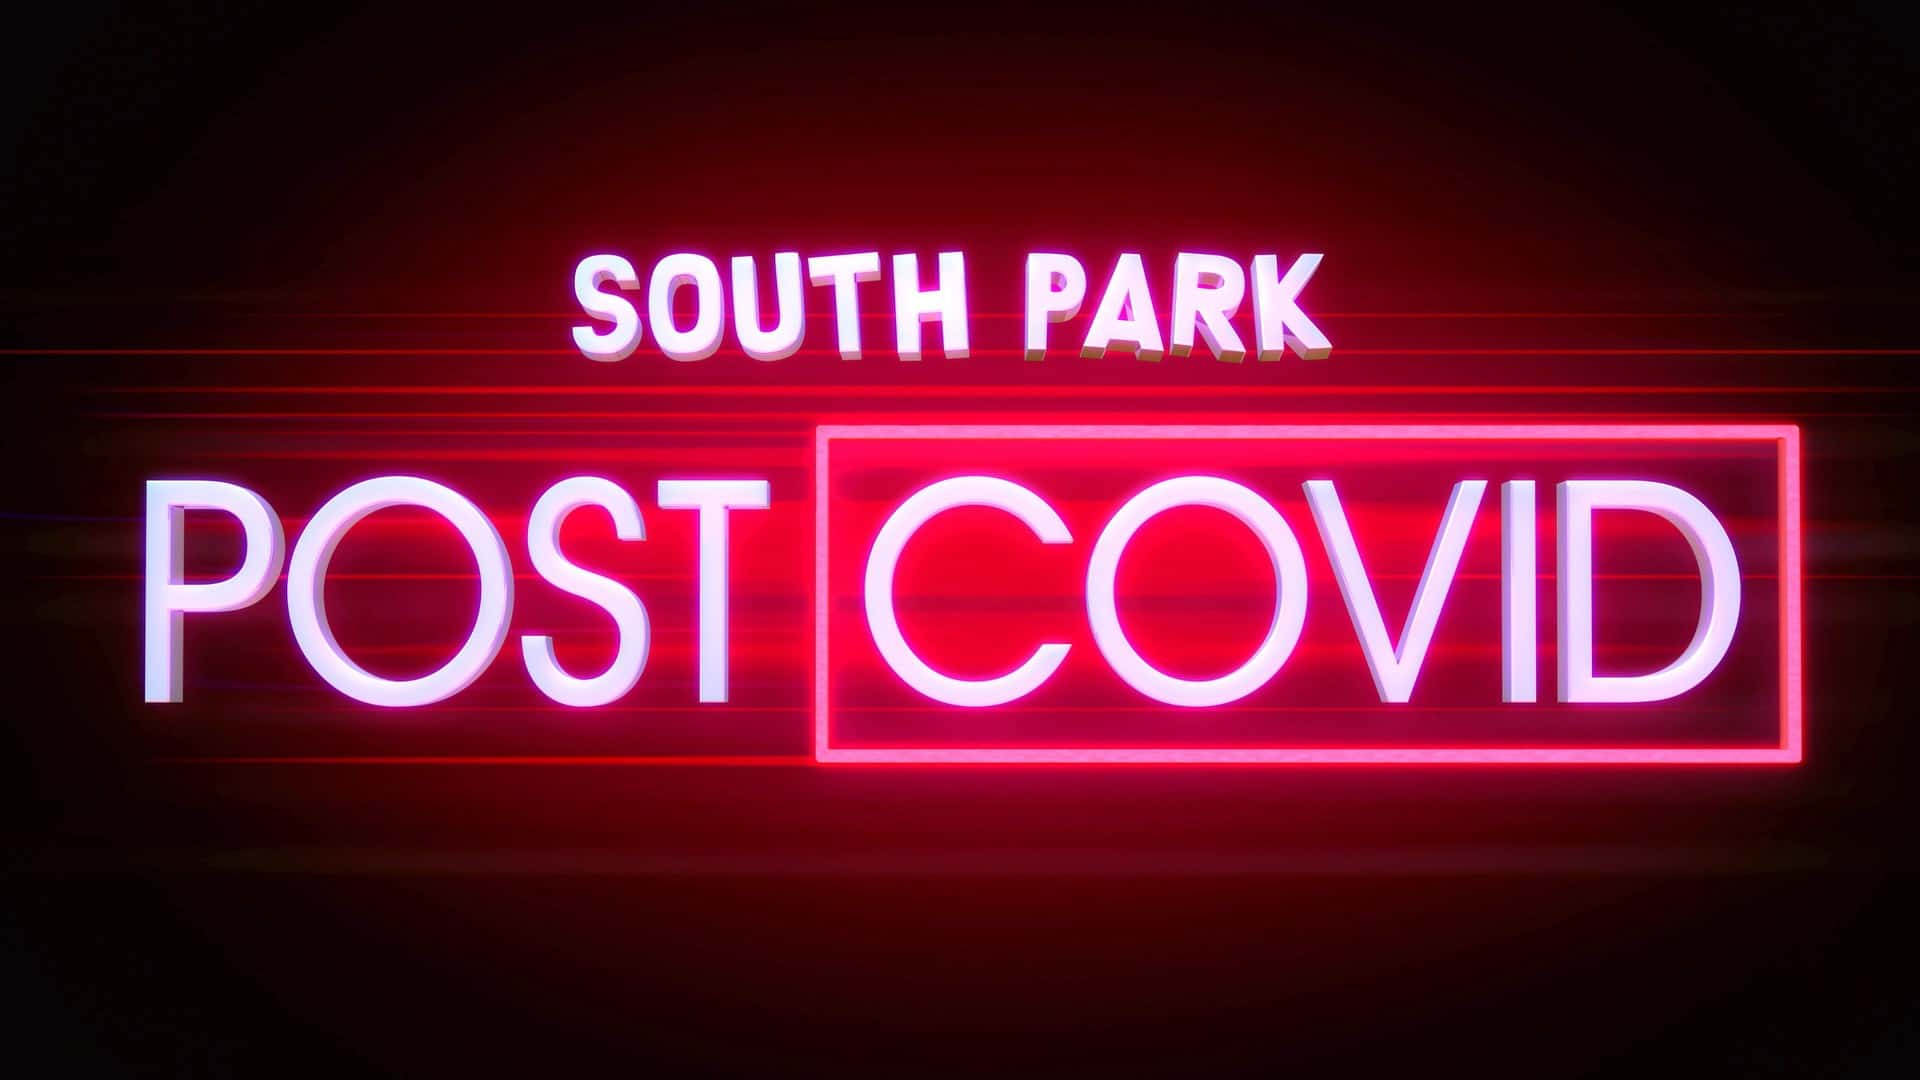 South Park Post COVID Blu ray